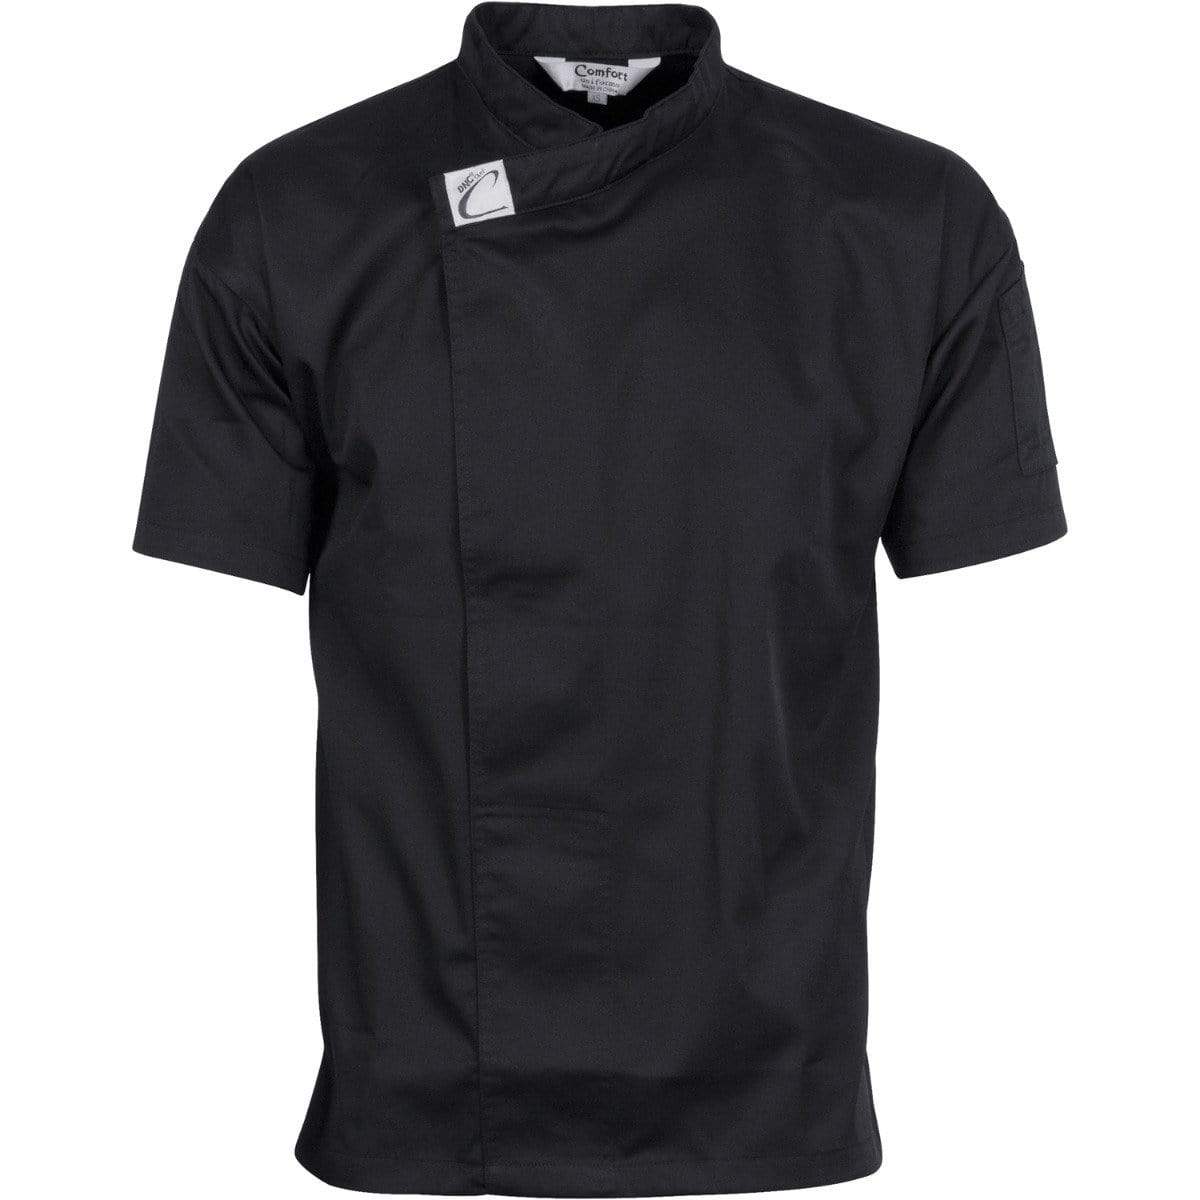 Dnc Workwear Short Sleeve Tunic - 1121 Hospitality & Chefwear DNC Workwear Black XS 